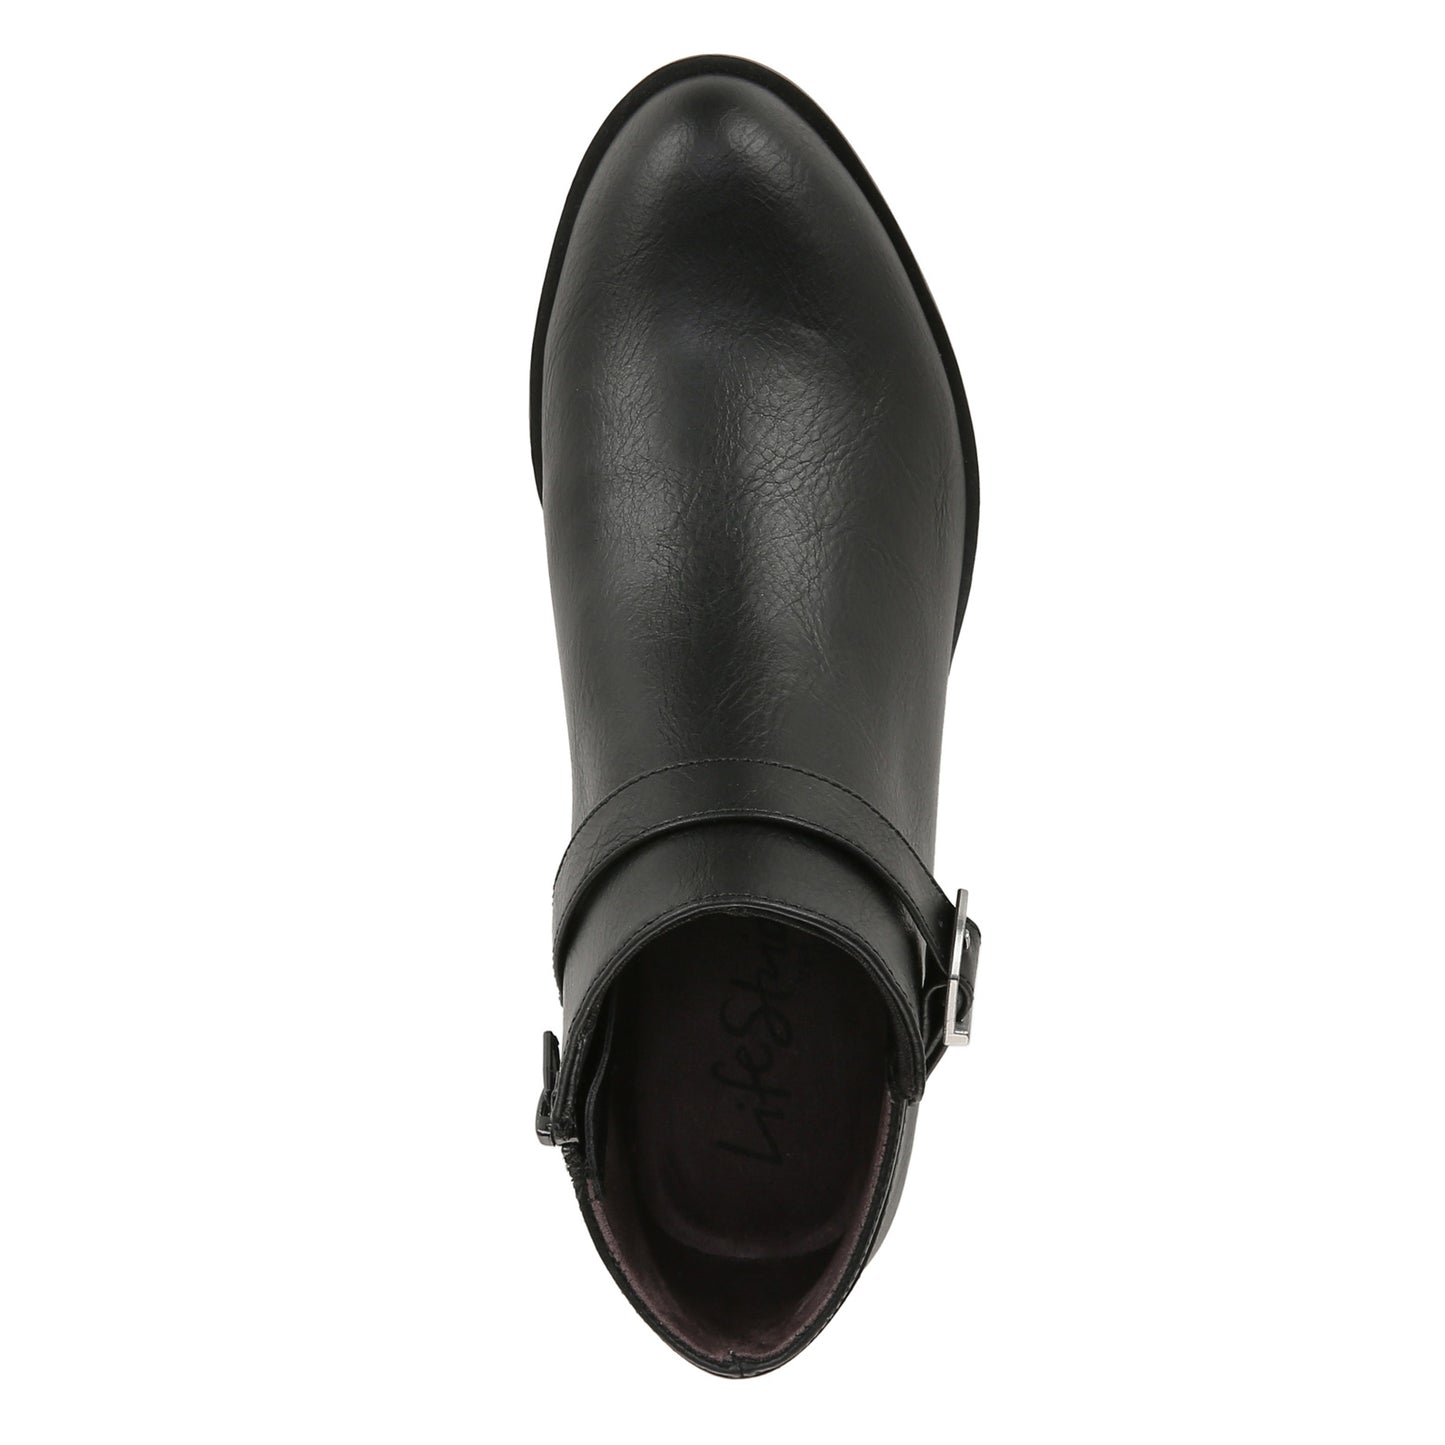 Peltz Shoes  Women's LifeStride Alexander Boot Black I6552S2001